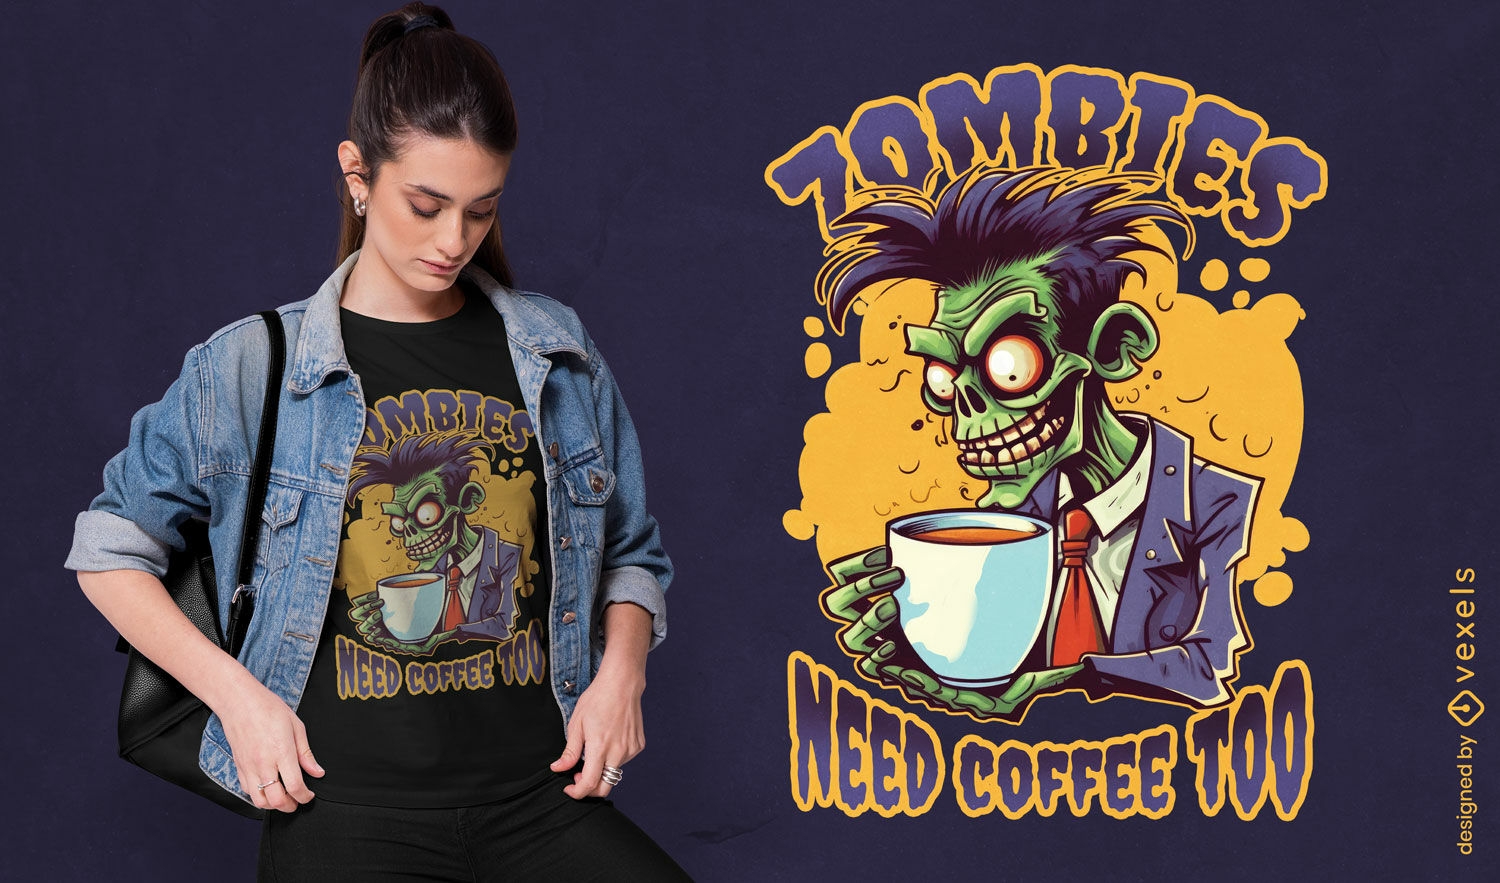 Zombie drinking coffee t-shirt psd